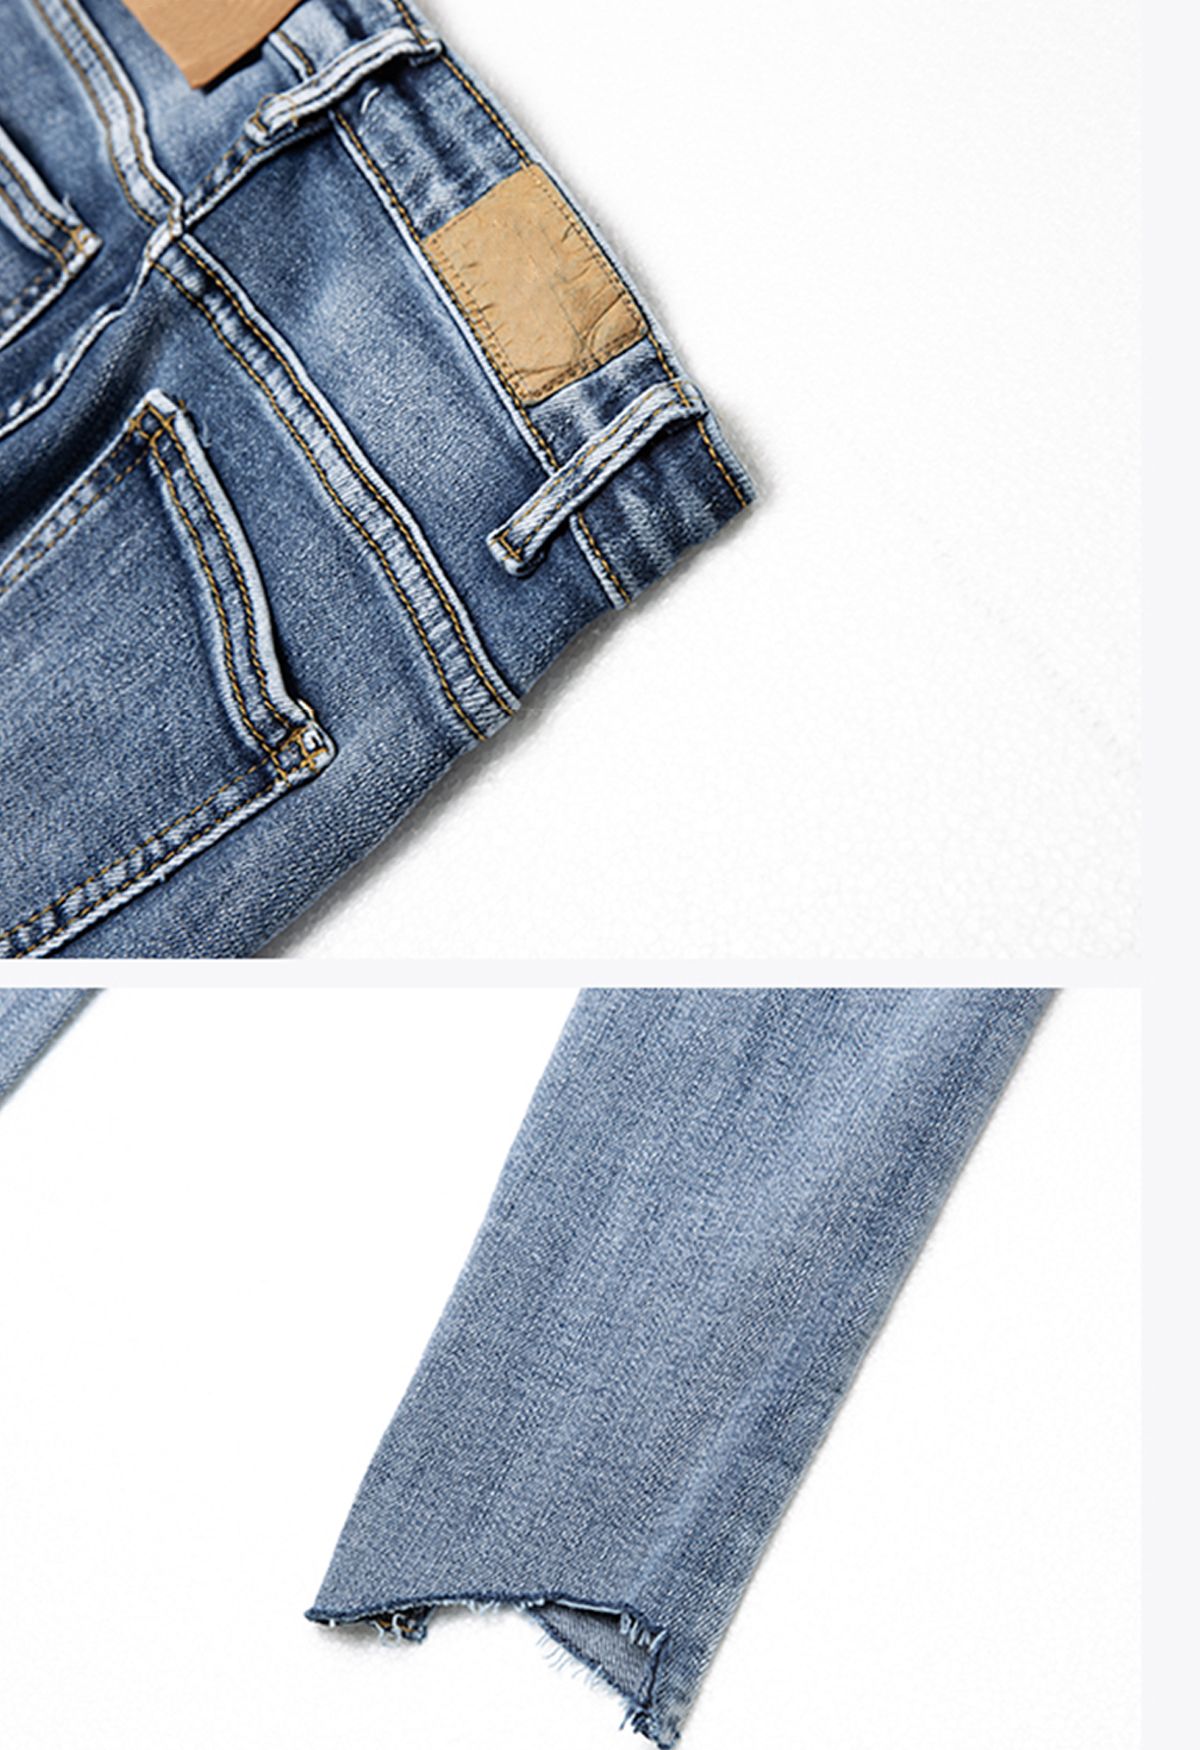 Irregular Raw Hem Distressed Cropped Jeans